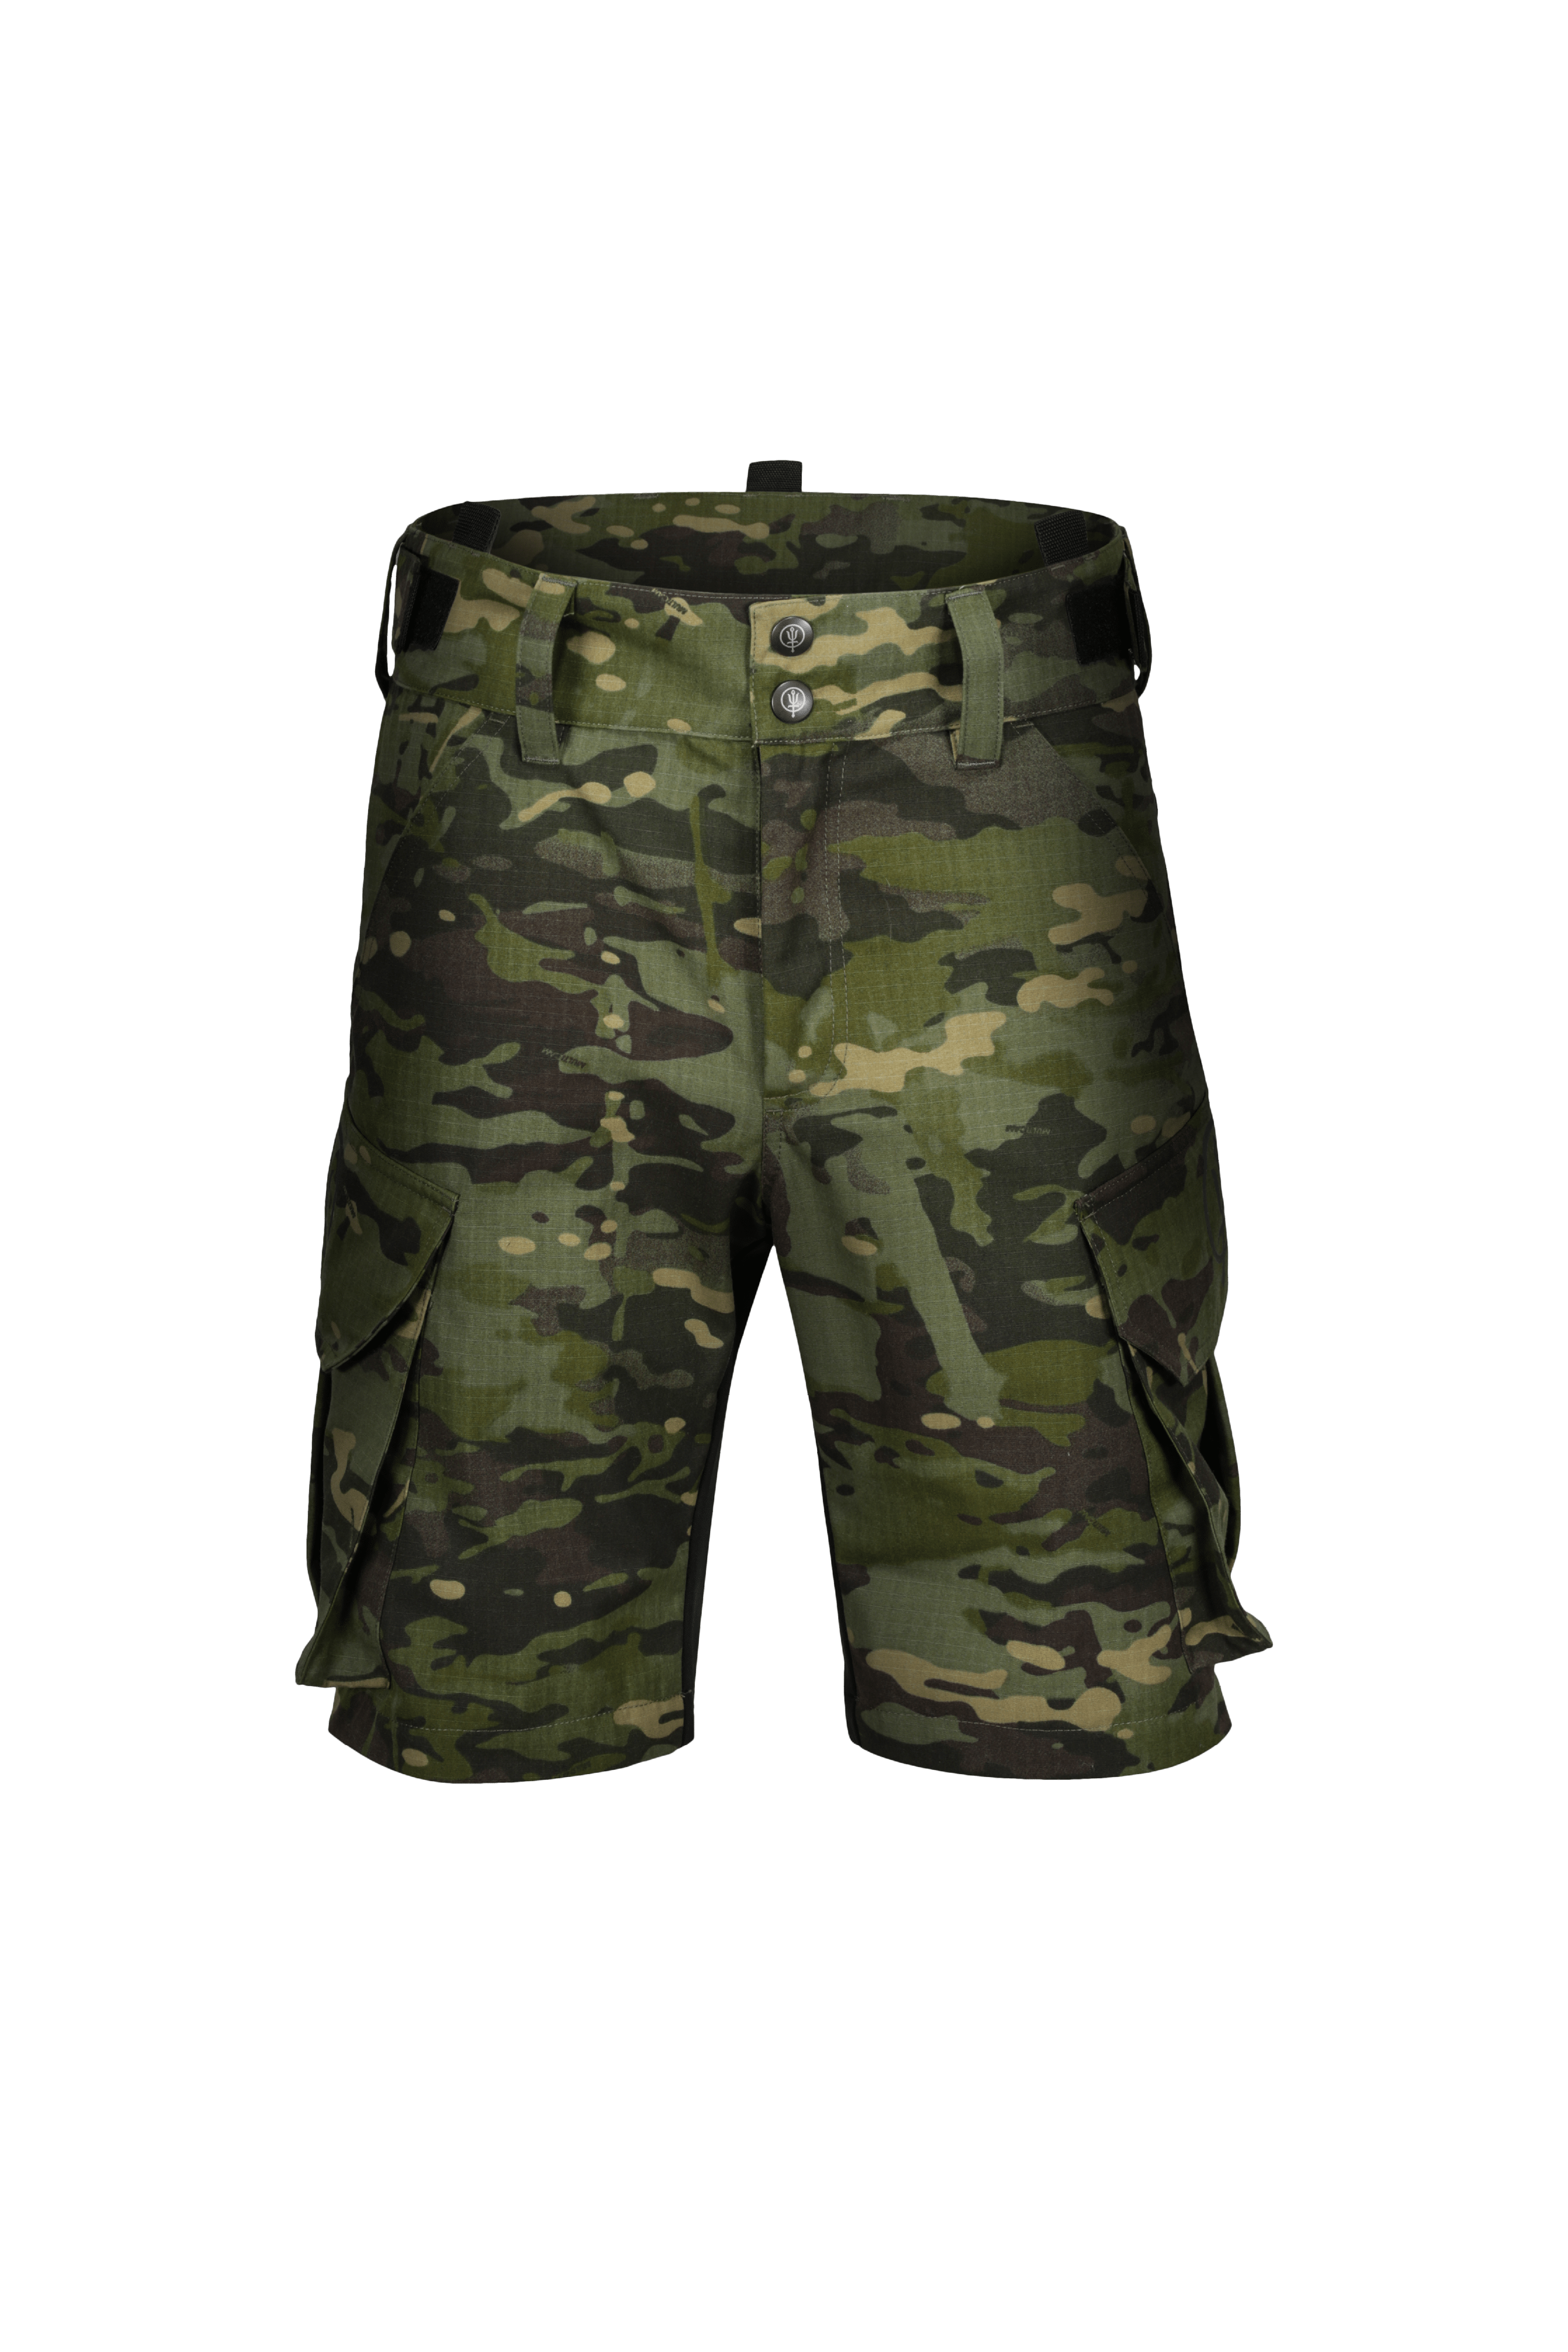 Charge Shorts  Mens Walking  Hiking Heatwear Shorts Xs